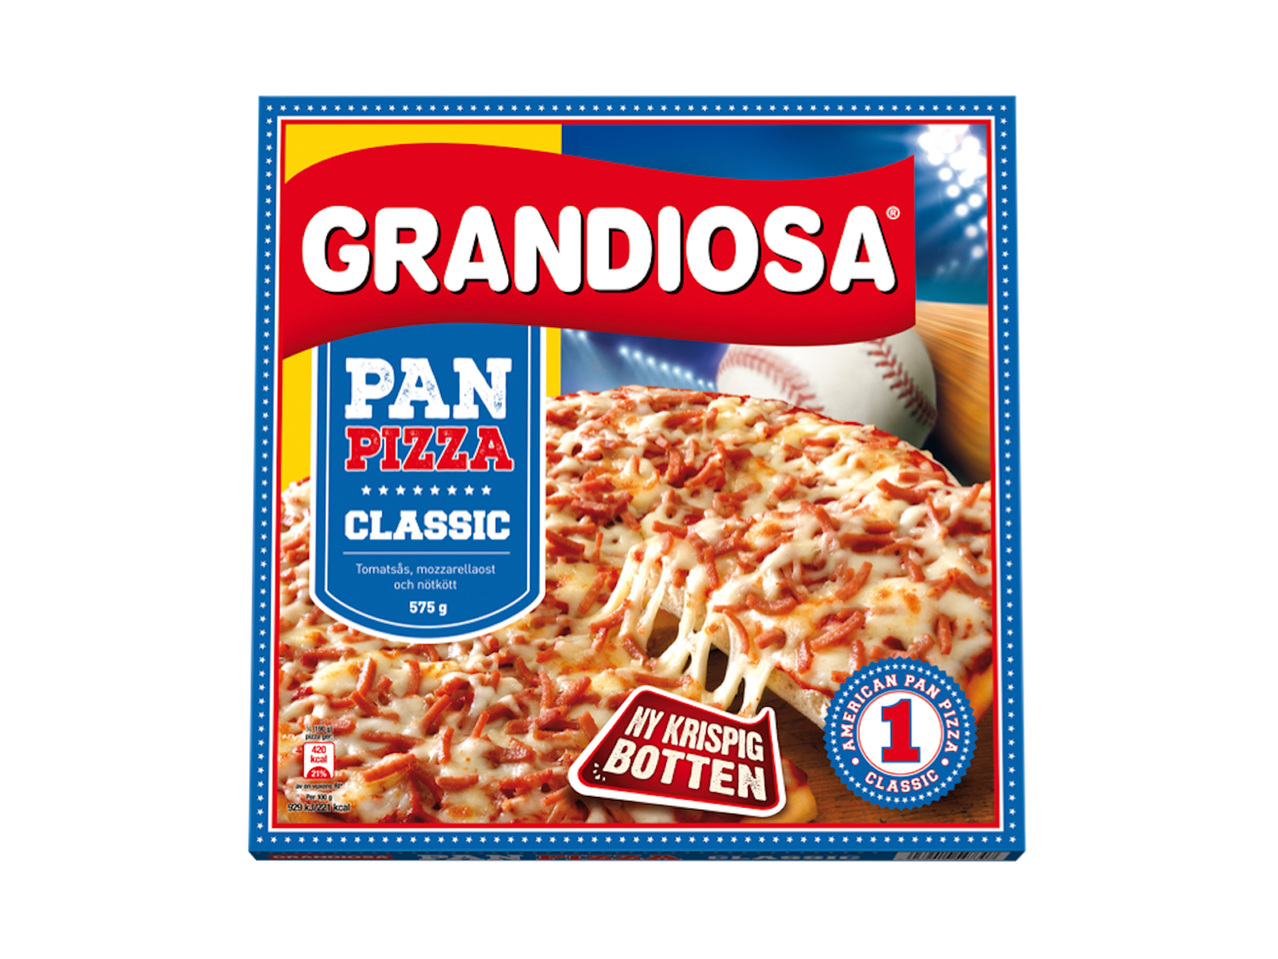 GRANDIOSA PAN PIZZA